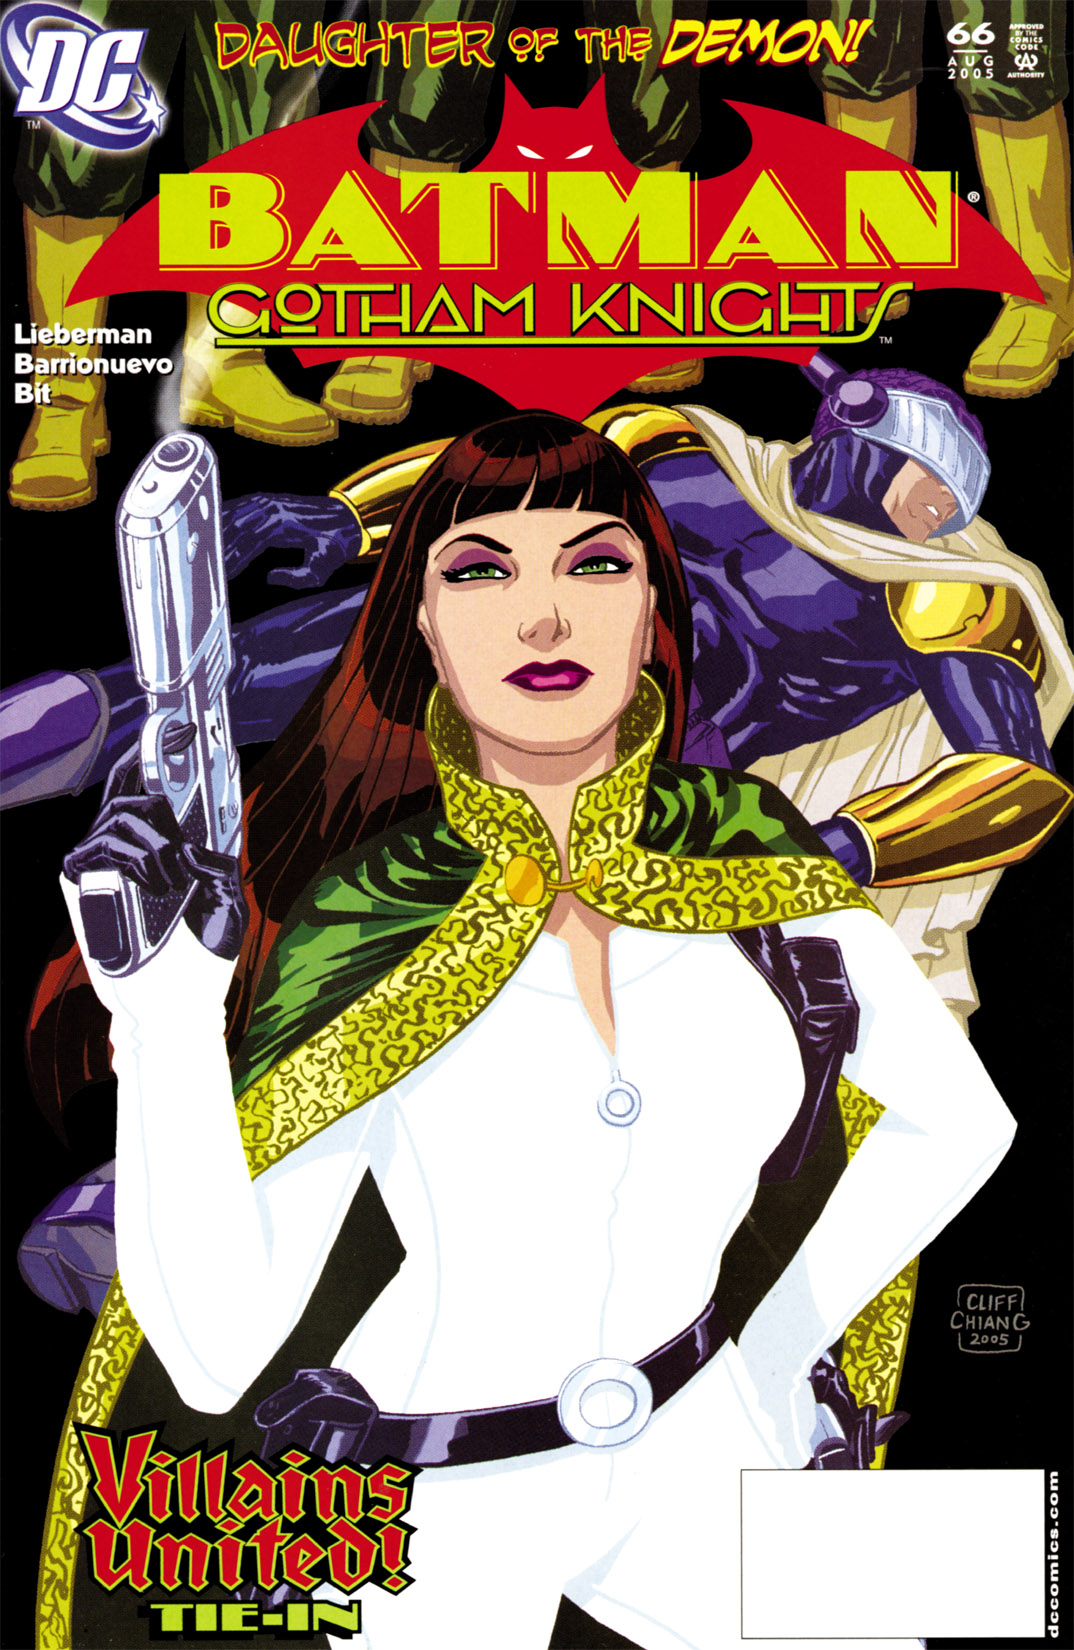 Read online Batman: Gotham Knights comic -  Issue #66 - 1